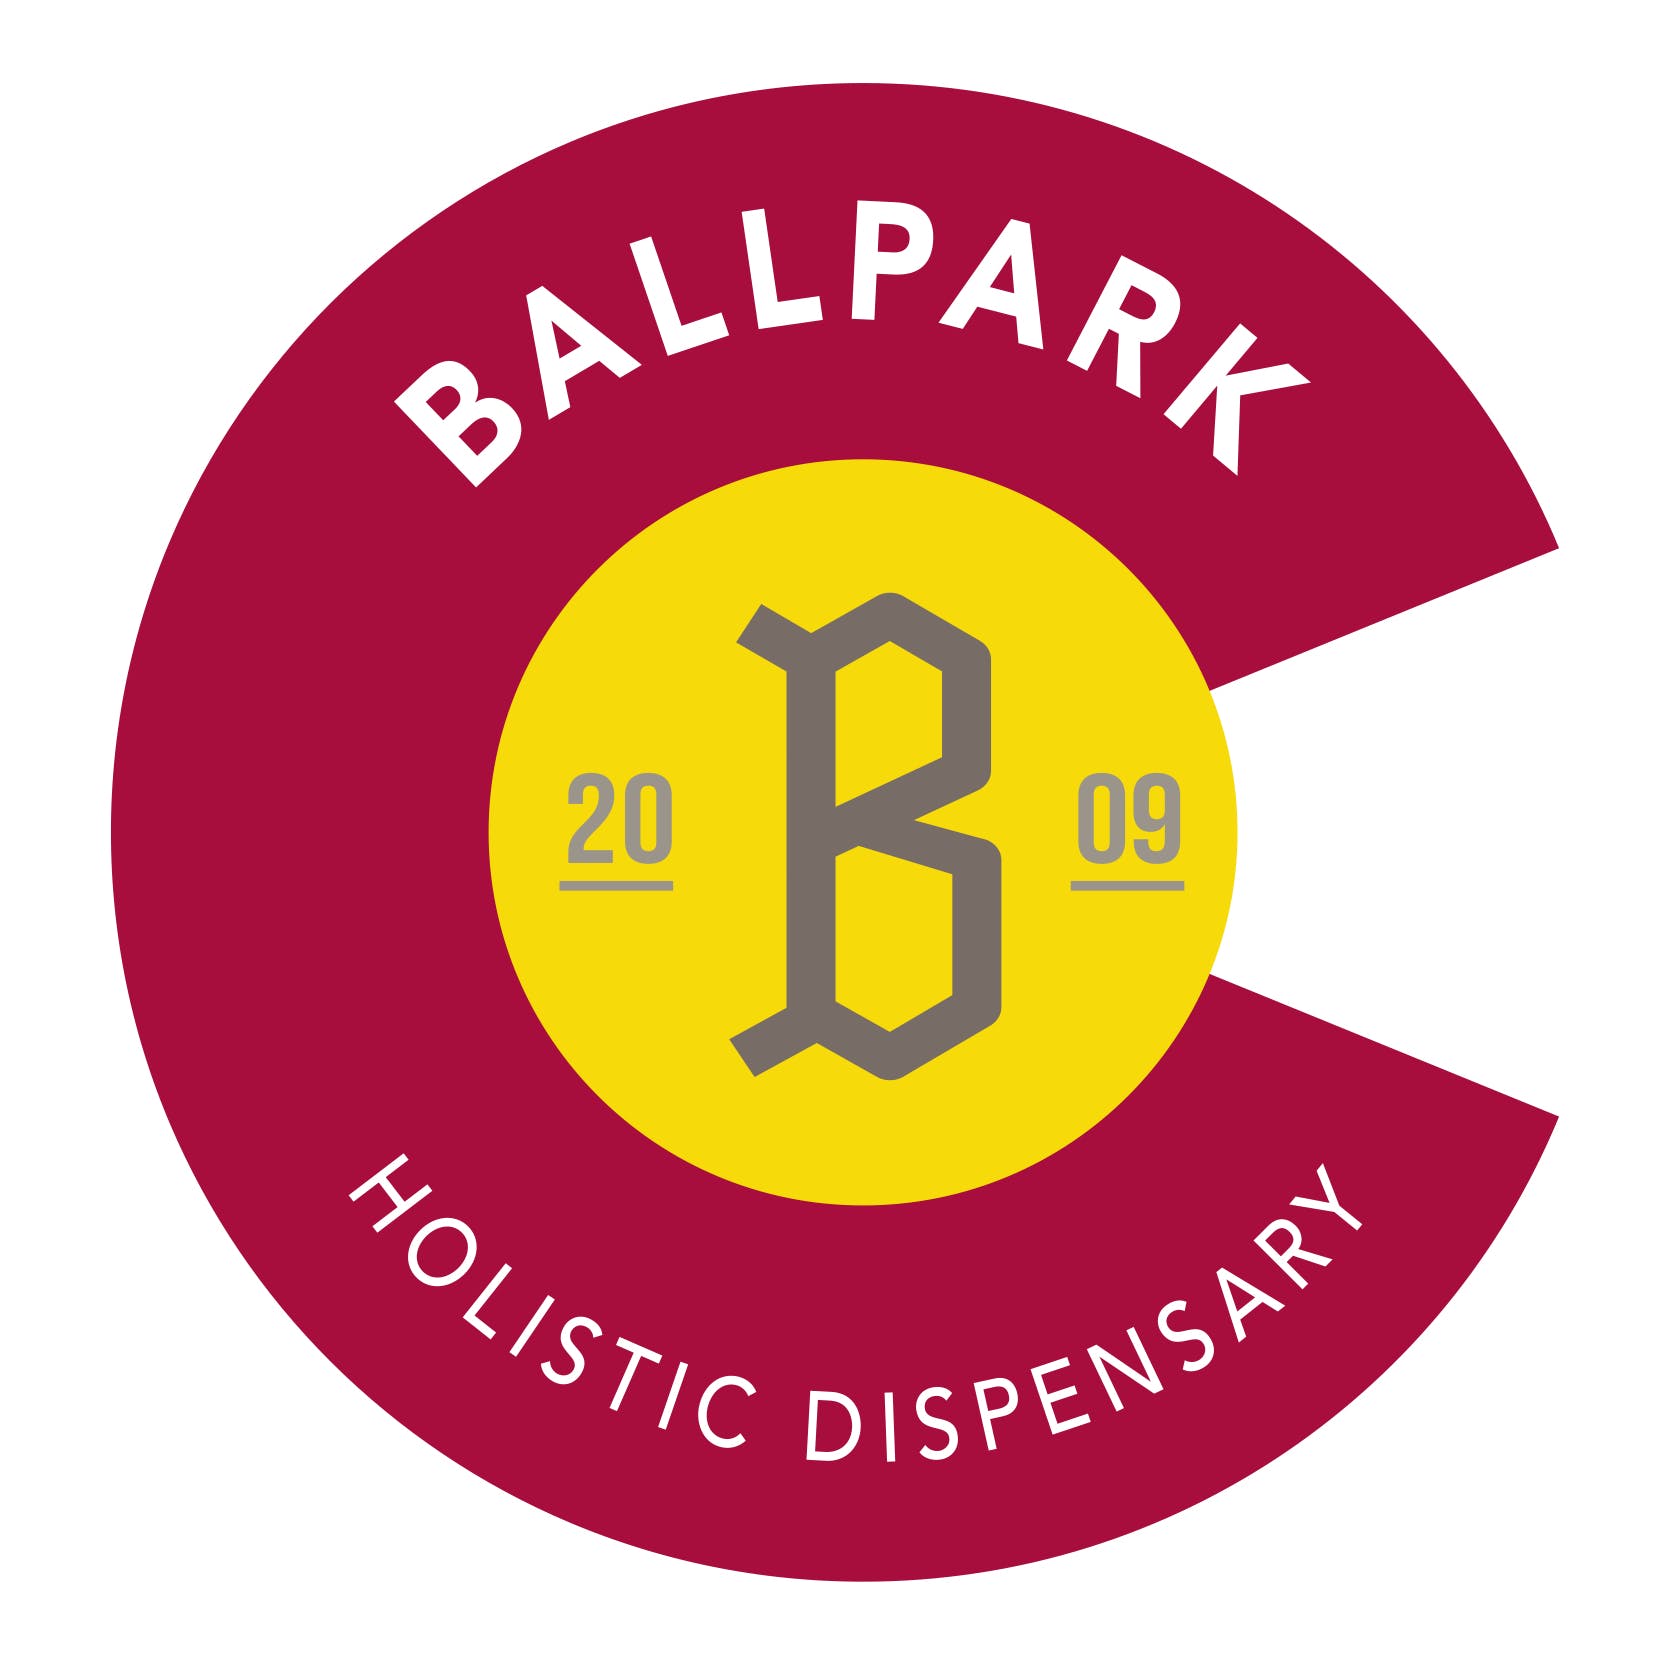 Ballpark Holistic Dispensary - Recreational - Medical Marijuana Doctors - Cannabizme.com